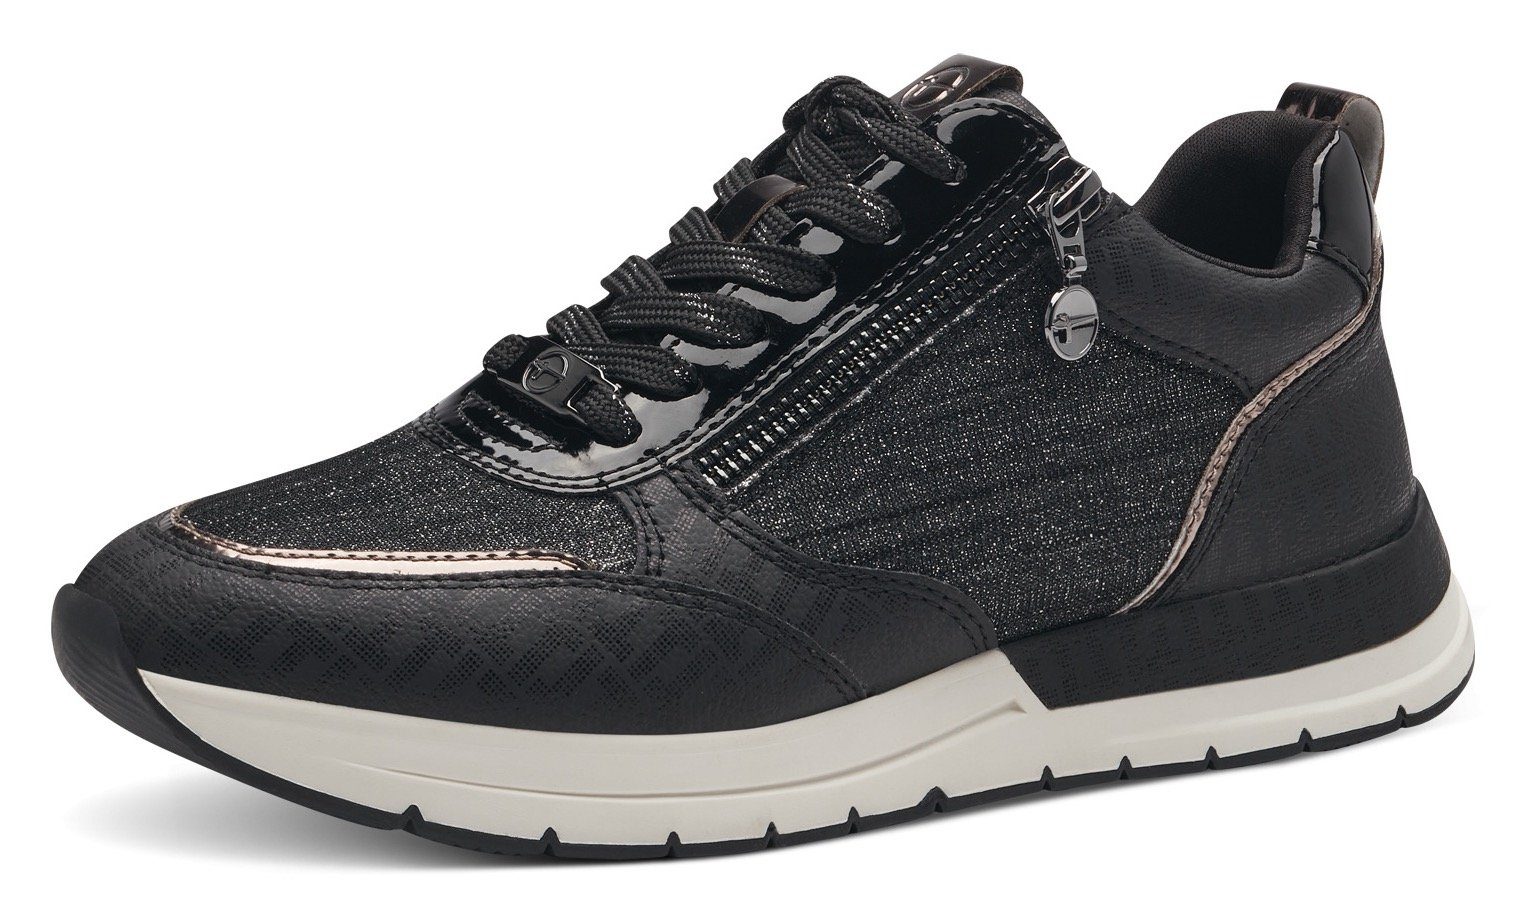 Tamaris Sneaker mit trendigen Metallic-Details schwarz-altsilberfarben